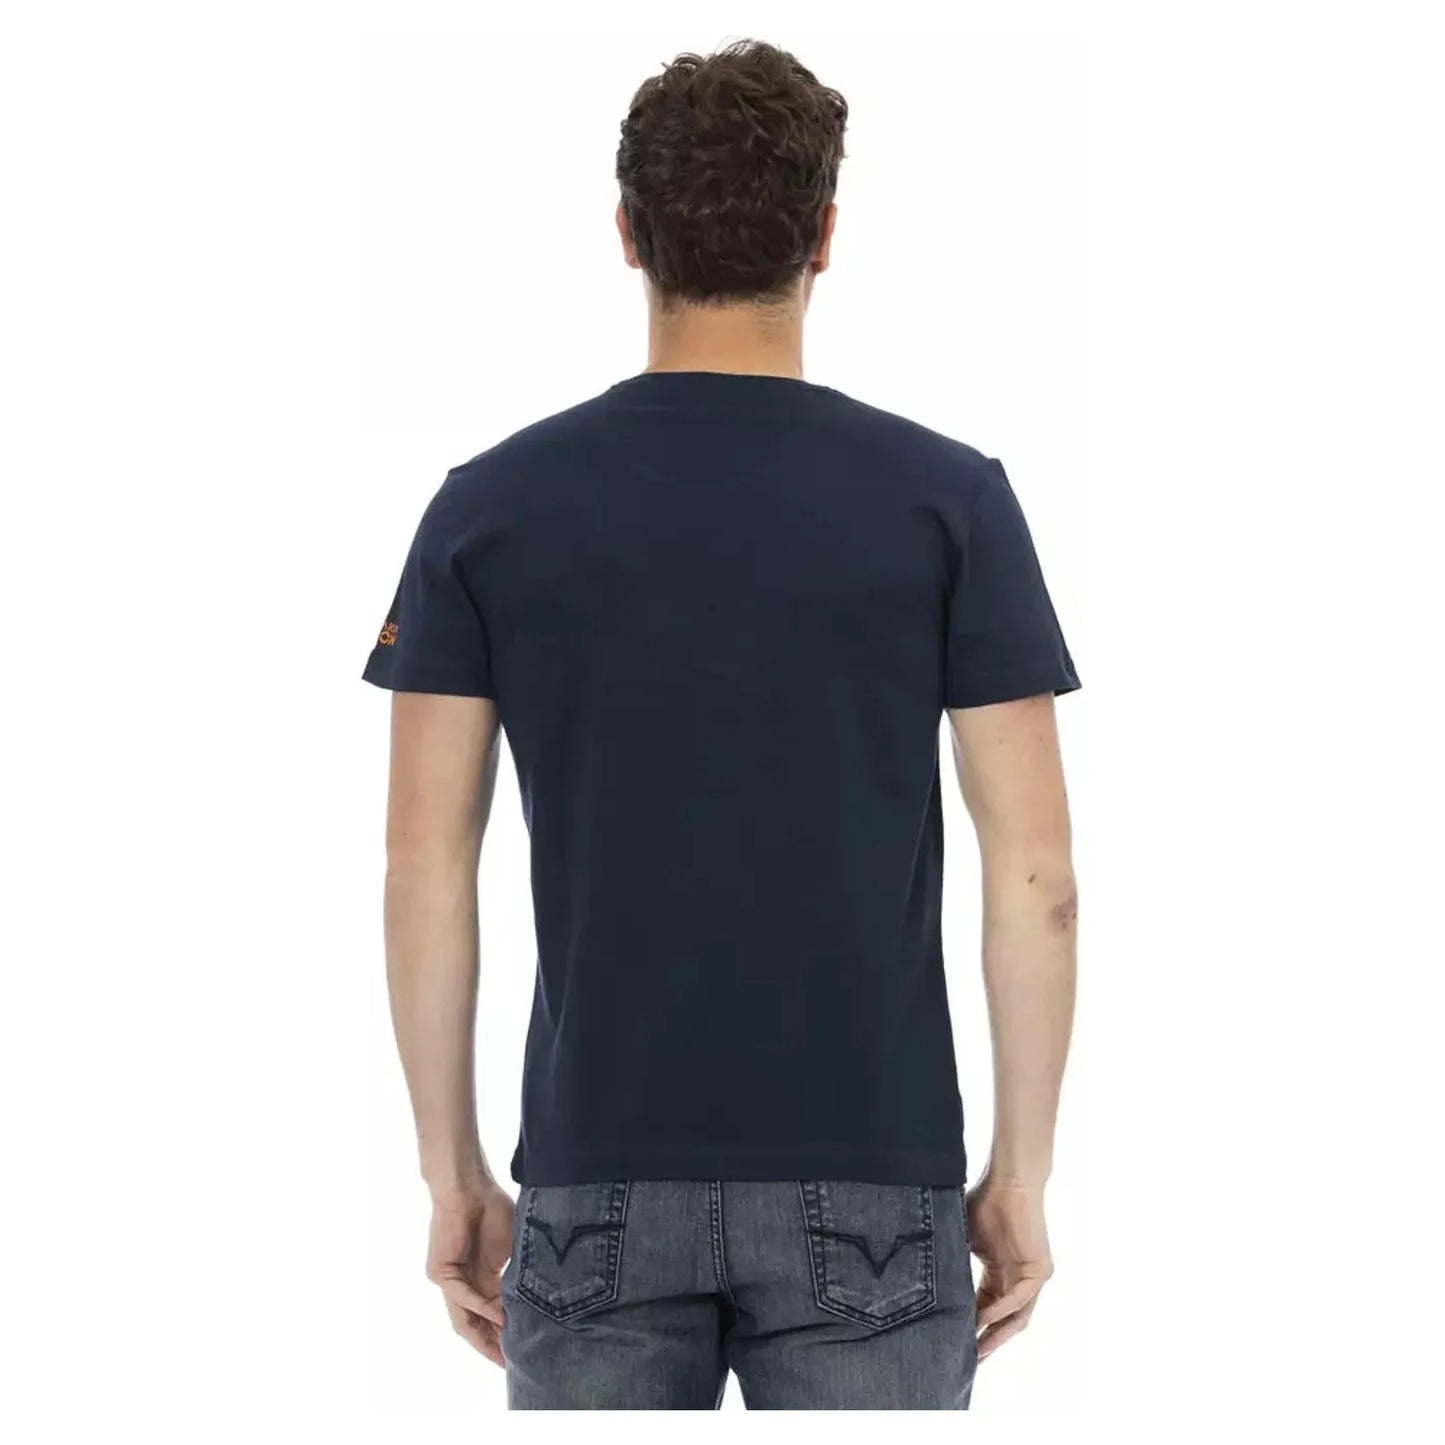 Trussardi Action Elegant Round Neck Short Sleeve Tee blue-cotton-t-shirt-93